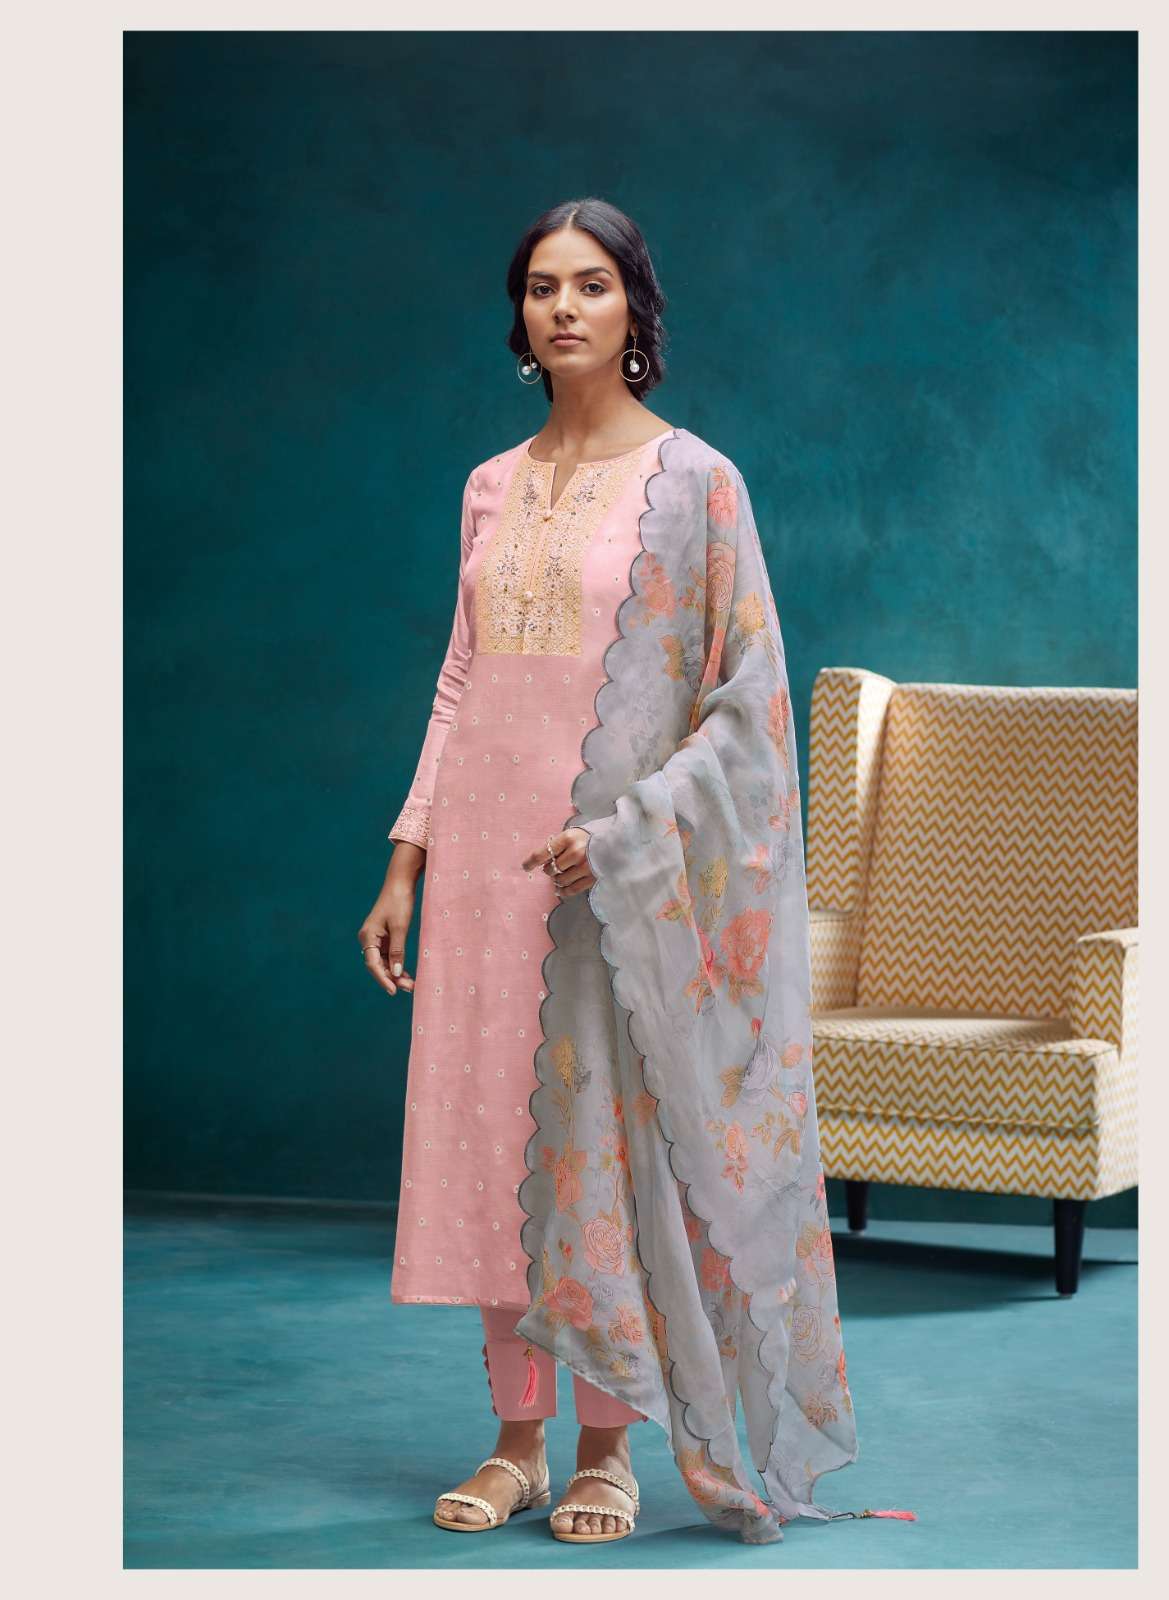 reyna melissa 951-956 series exclusive designer salwar kameez catalogue wholesale price surat 